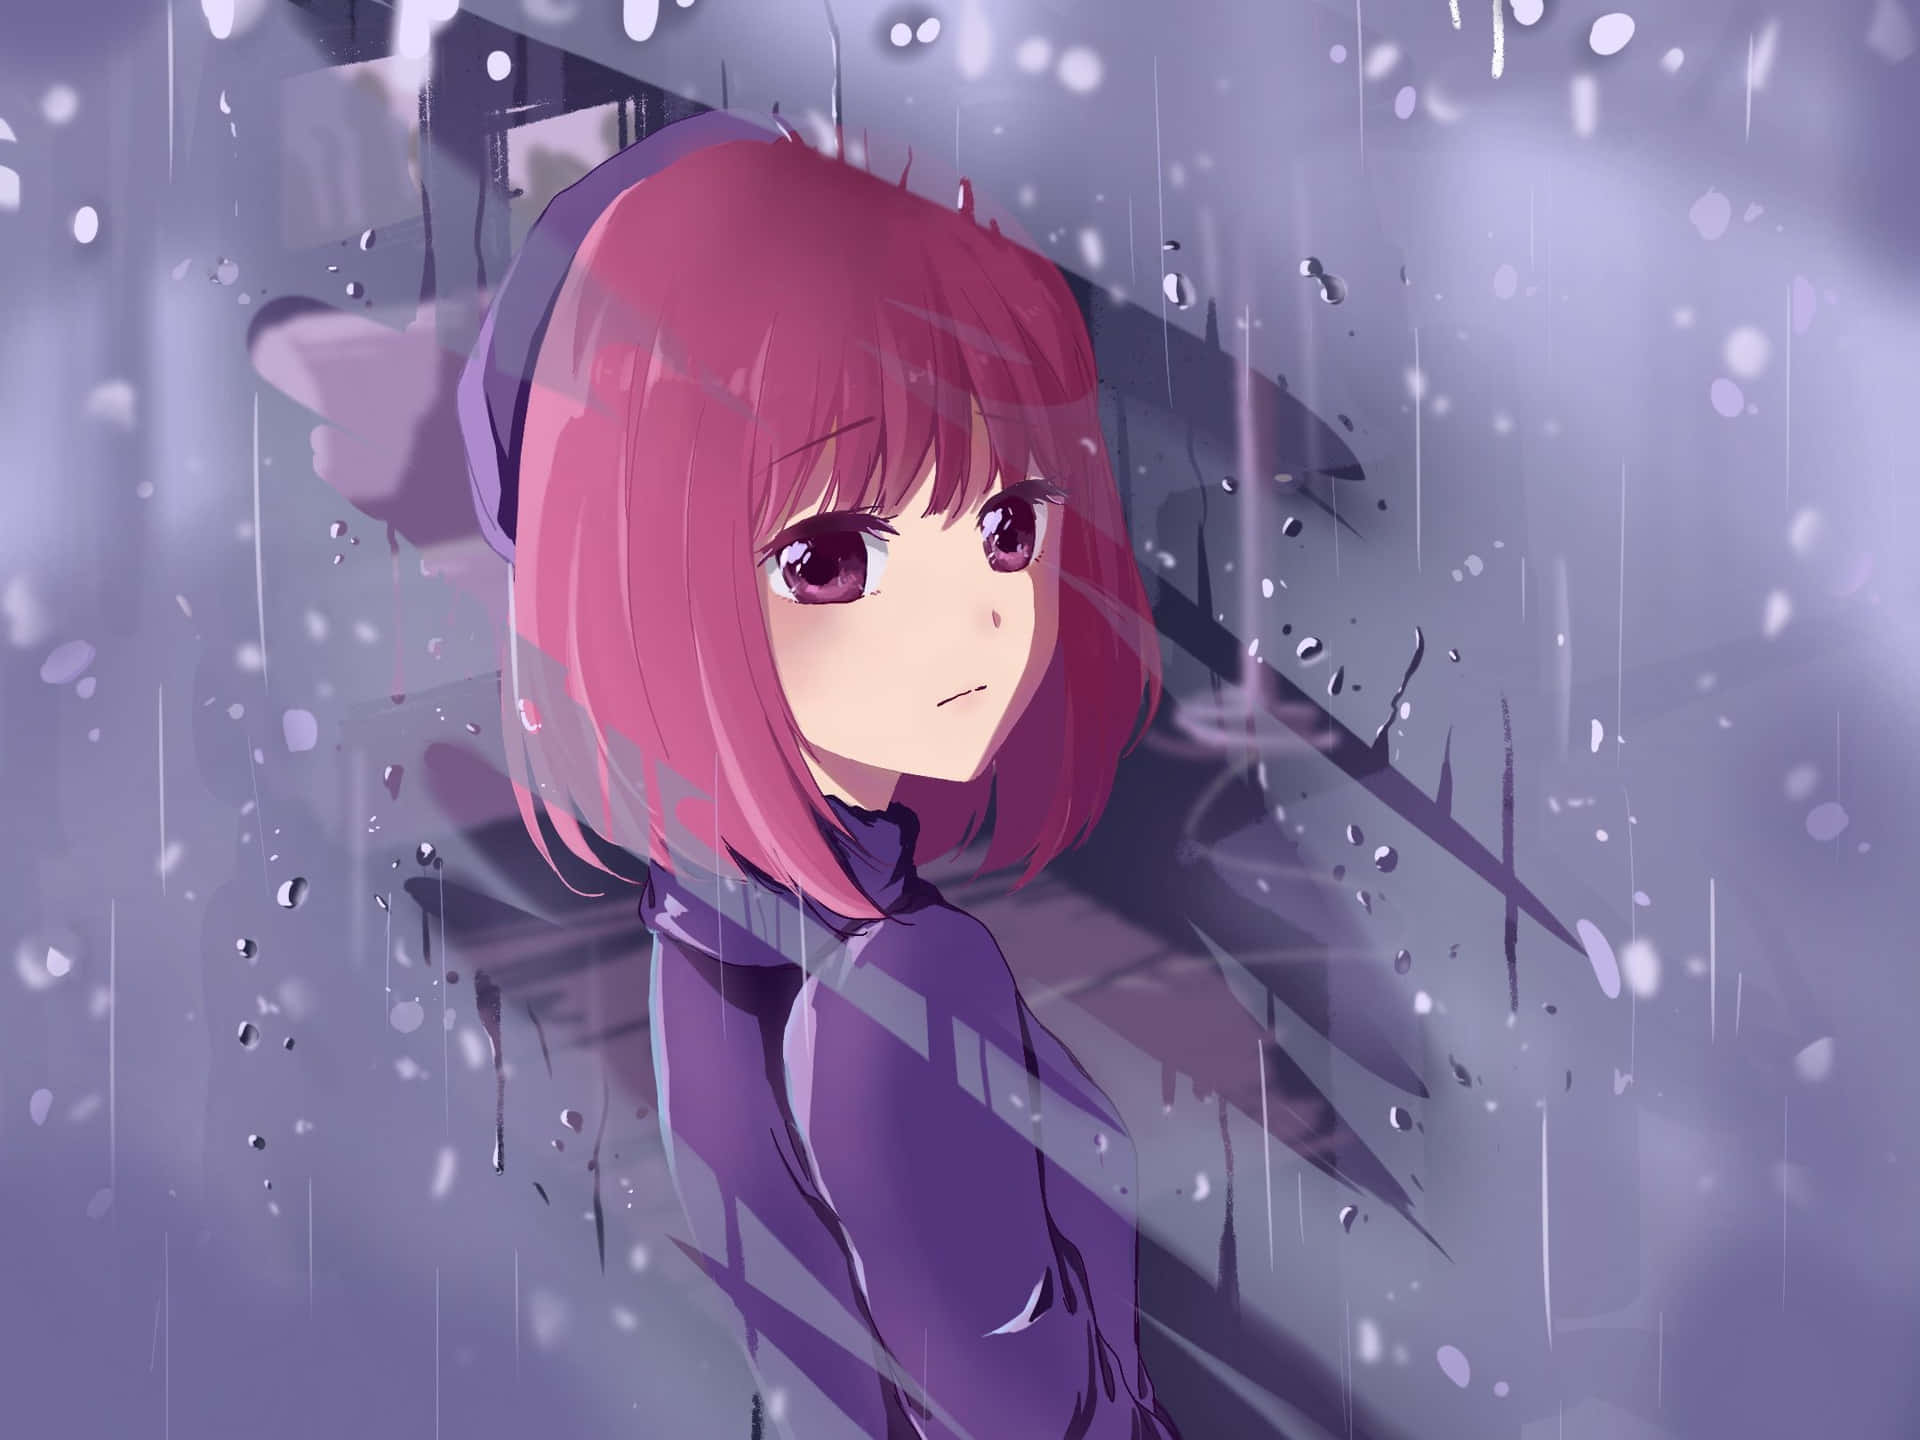 Rainy Reflection Anime Girl Wallpaper